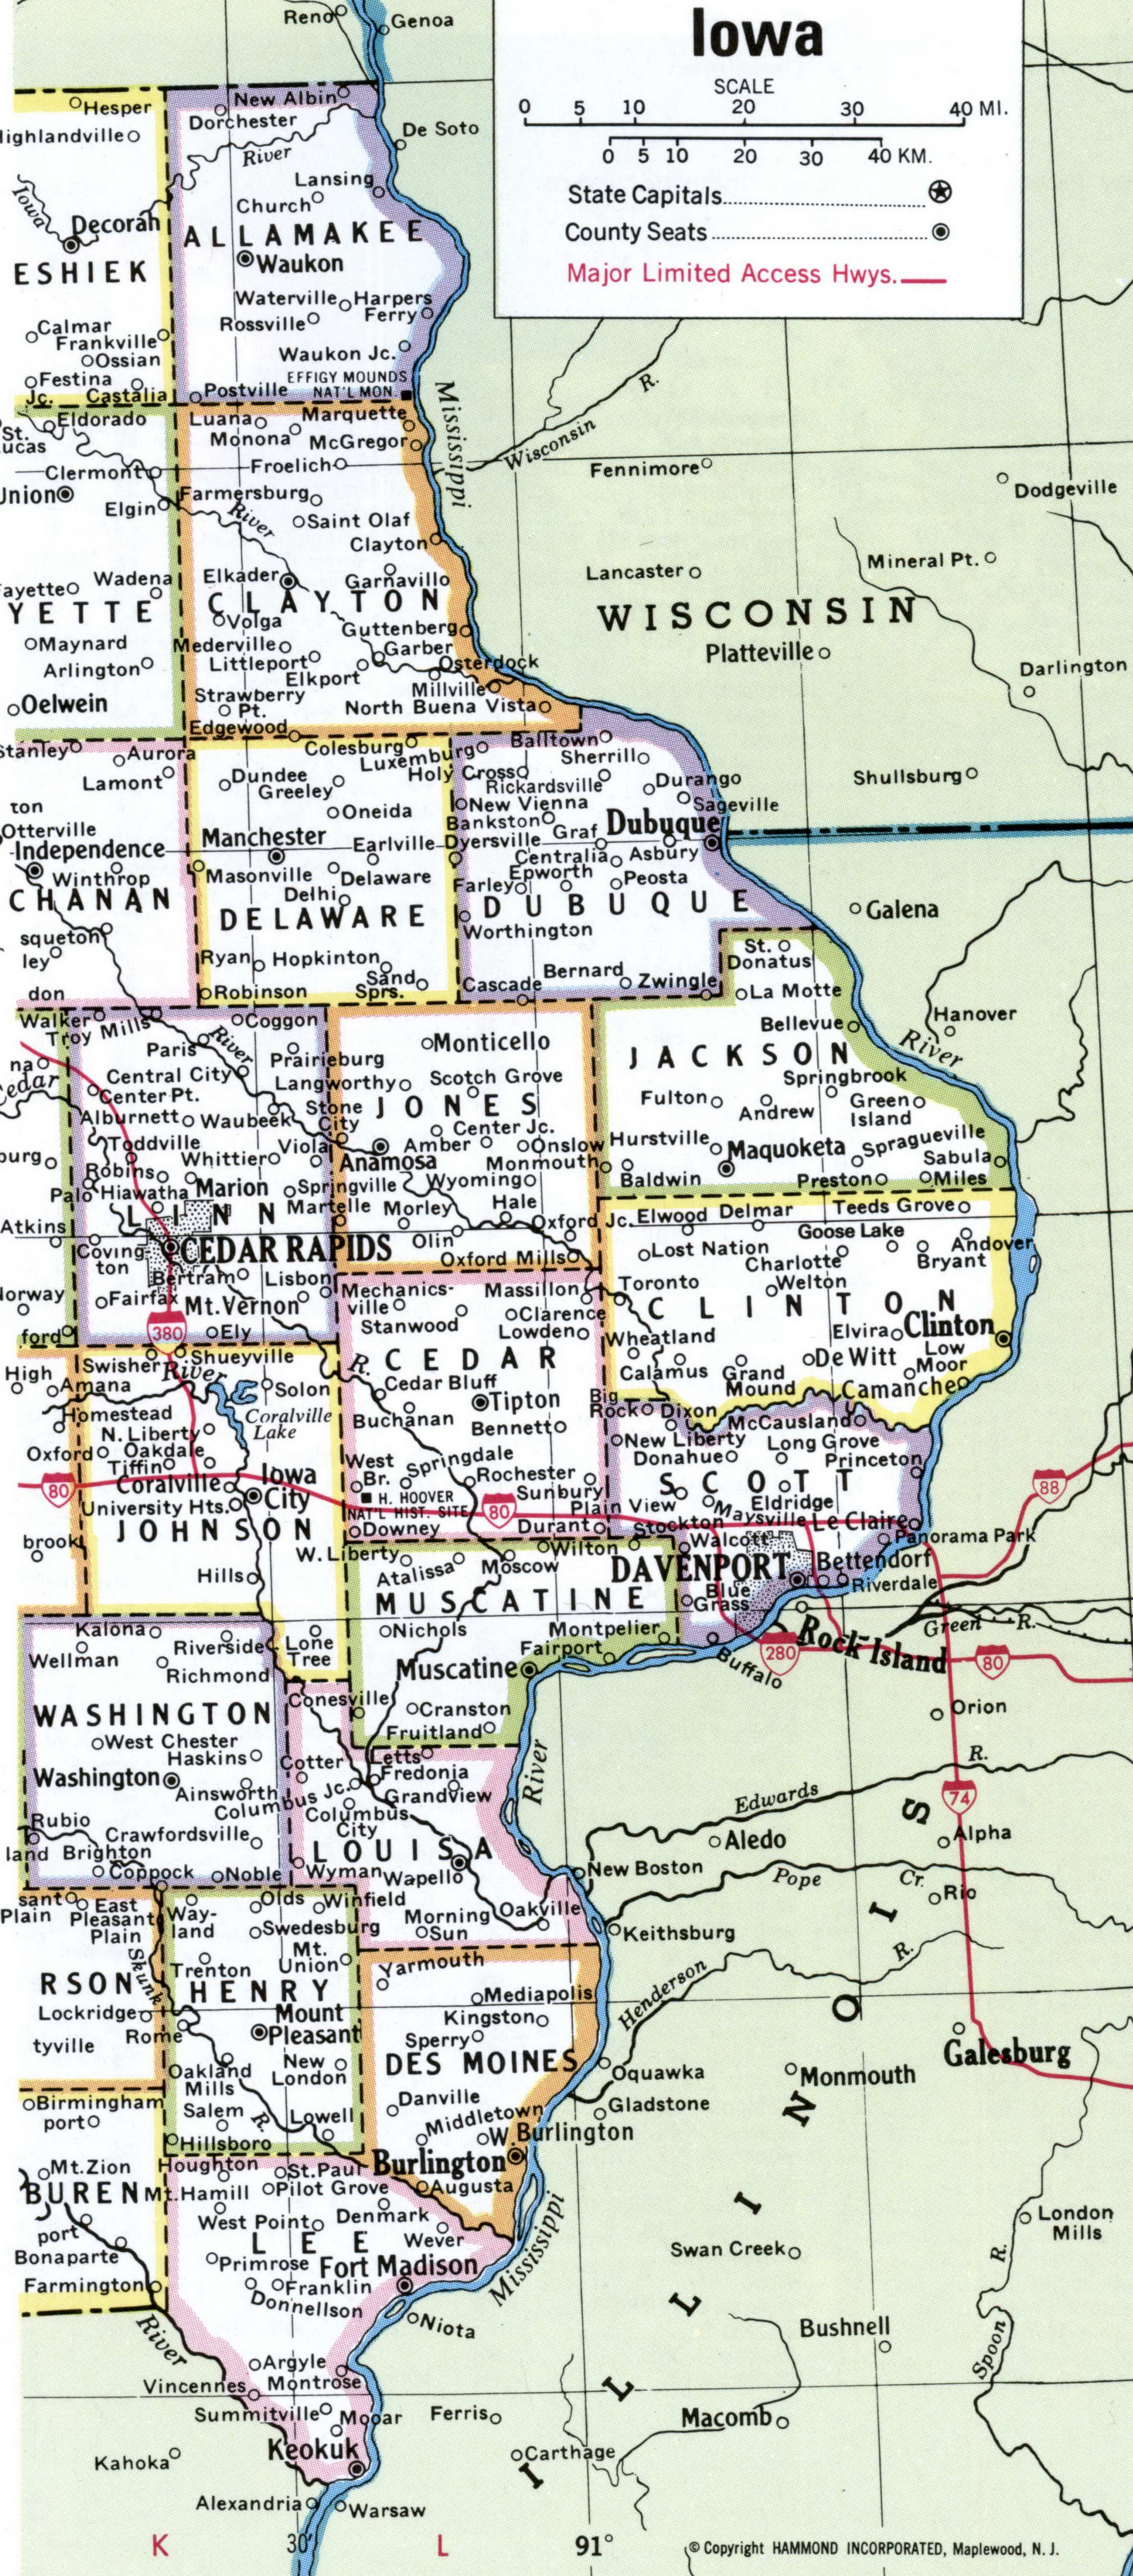 Counties Iowa map - eastern half 